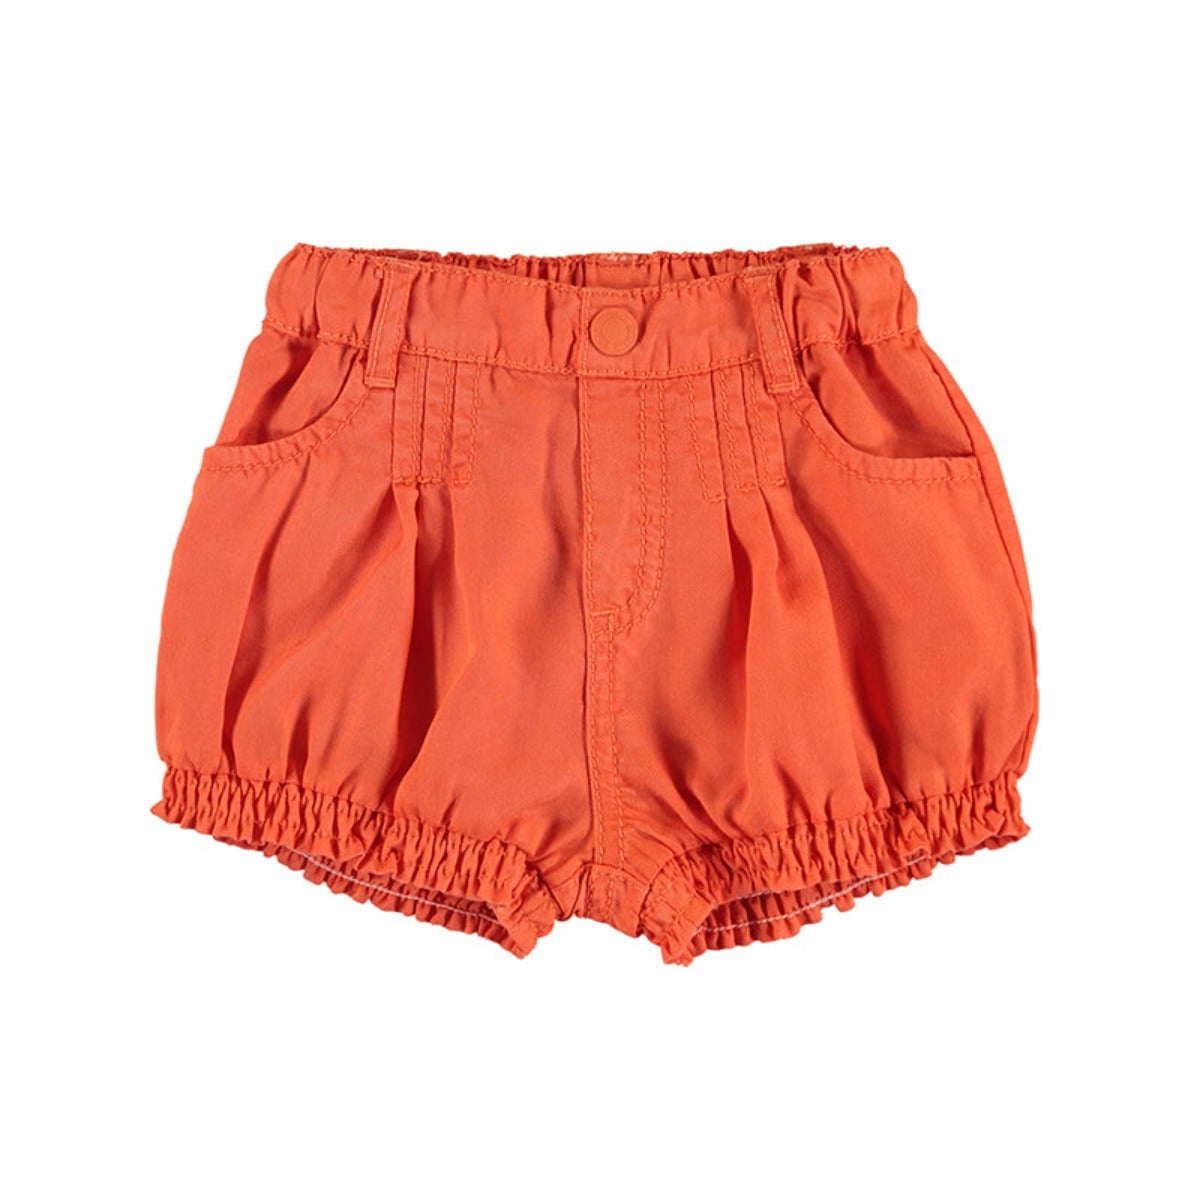 Tangerine Elastic Shorts